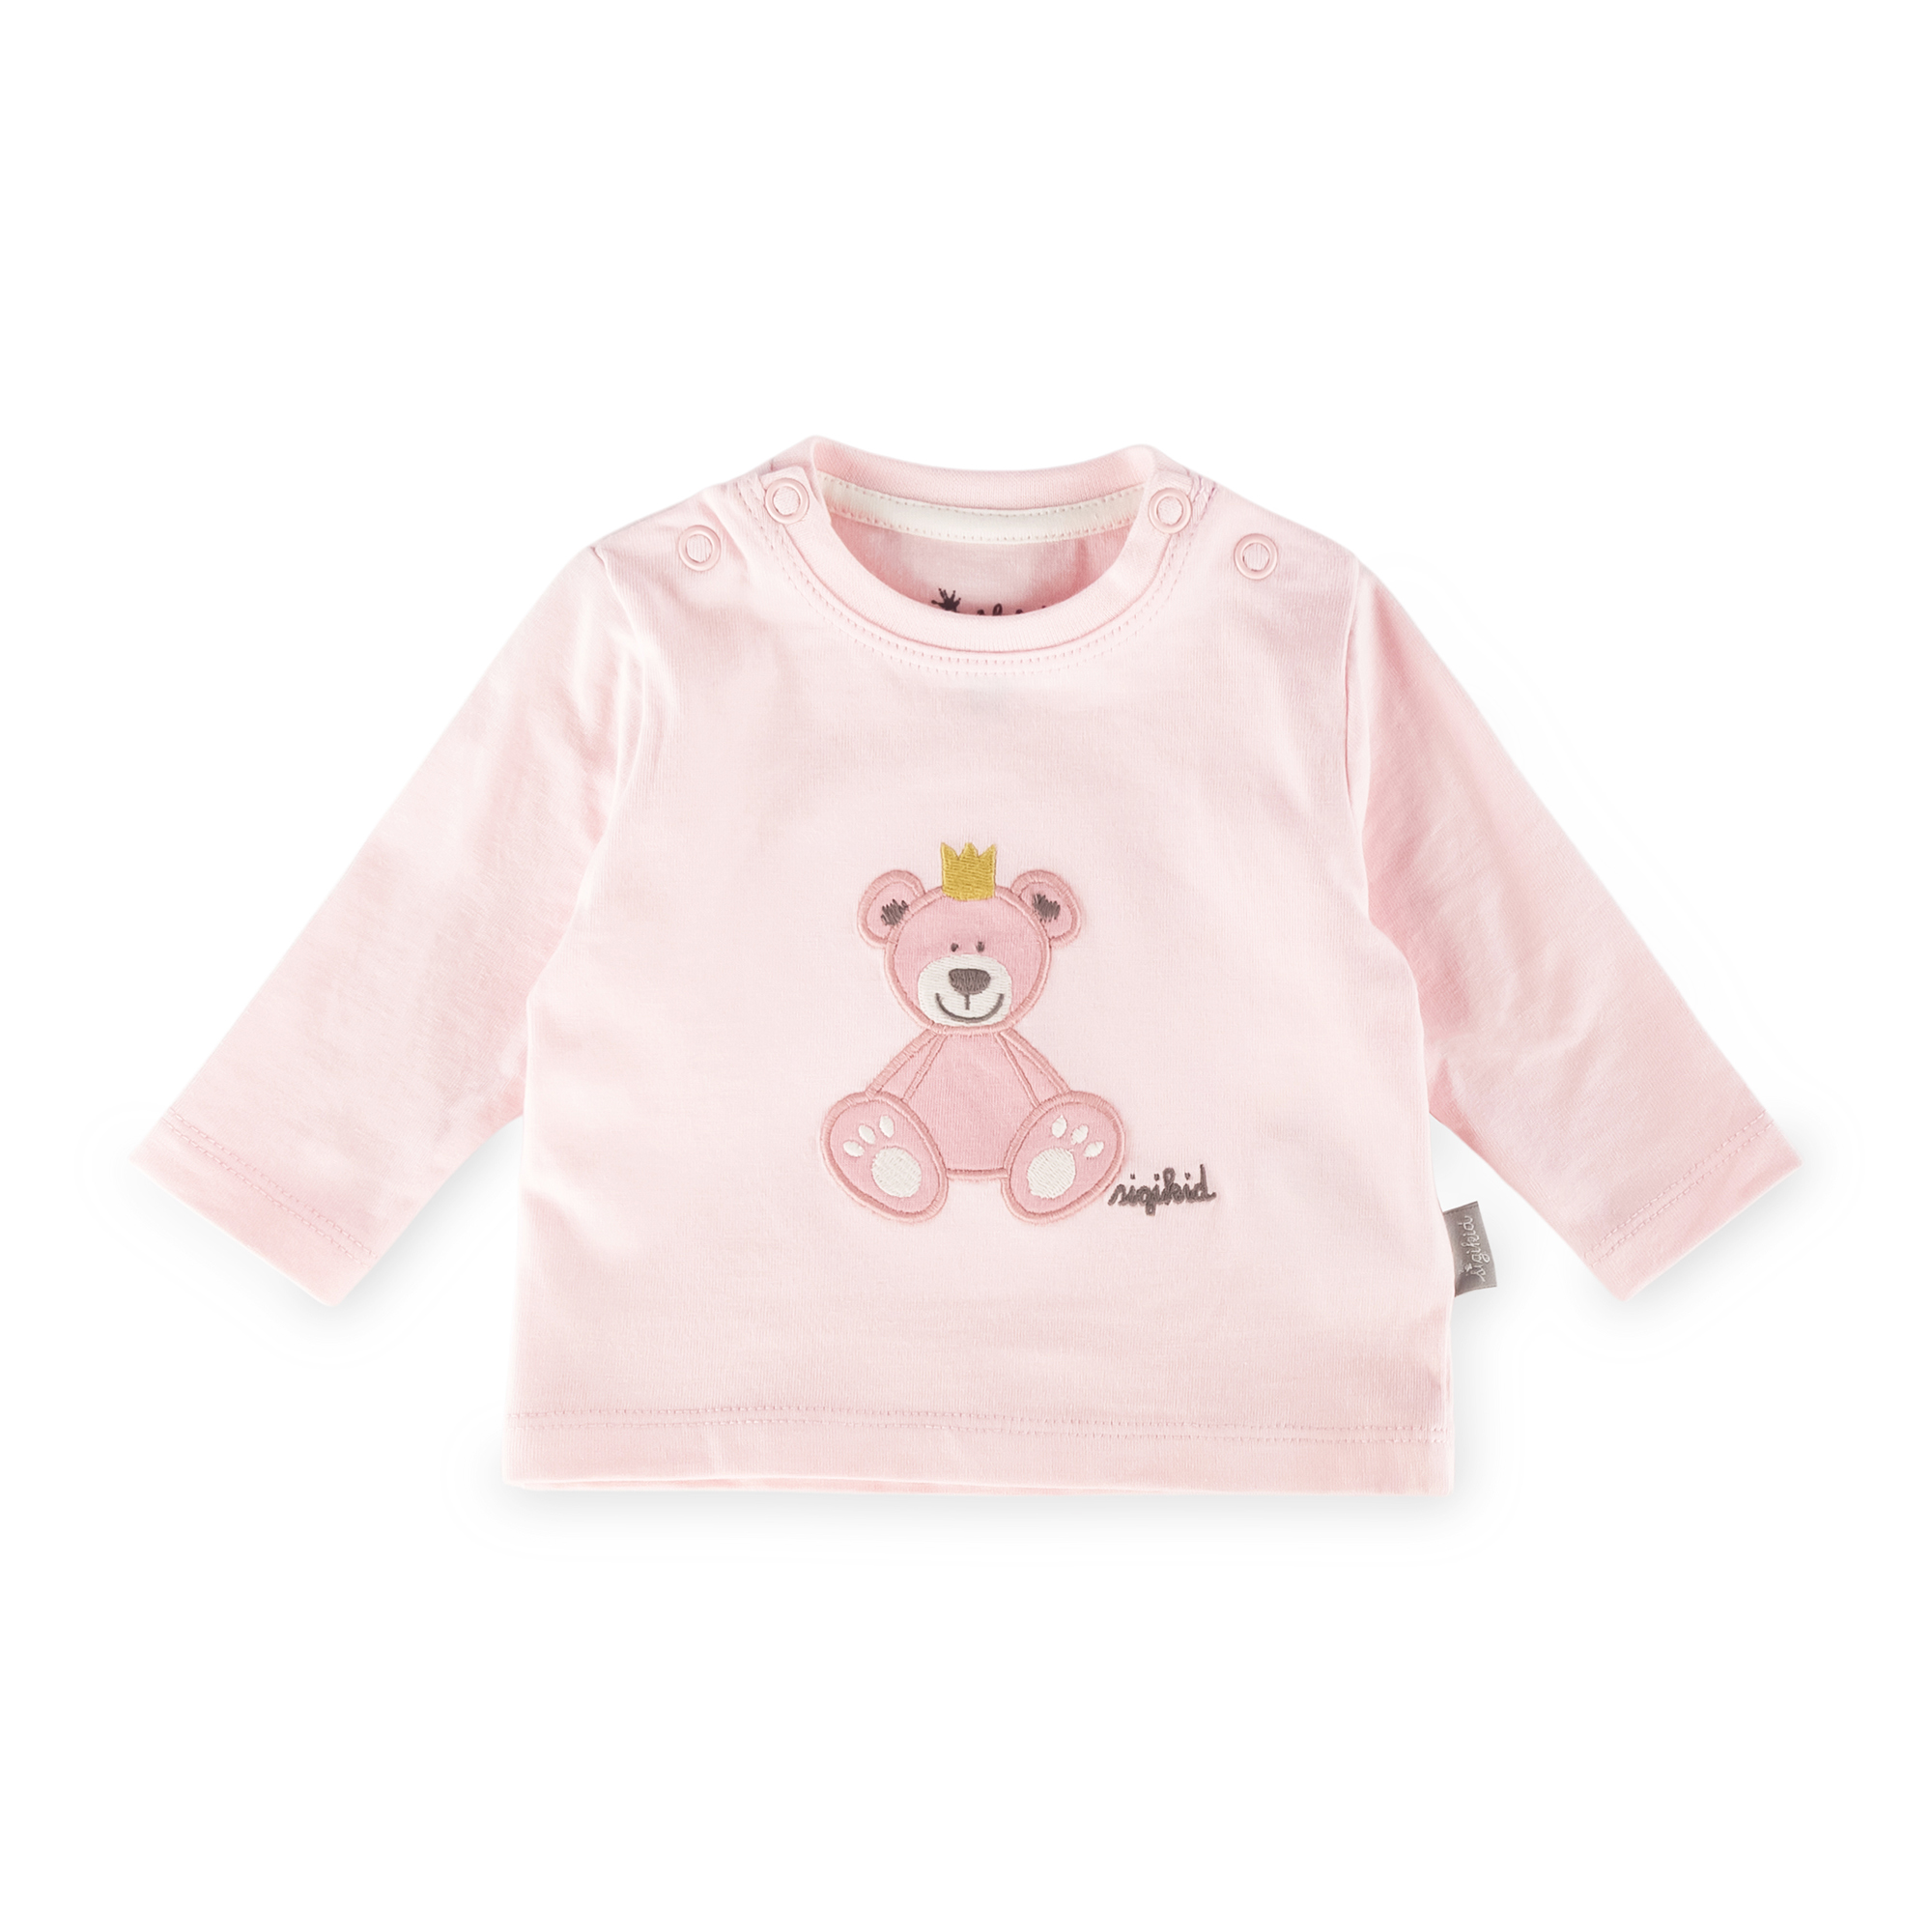 Newborn baby long sleeve Tee bear prince, pink